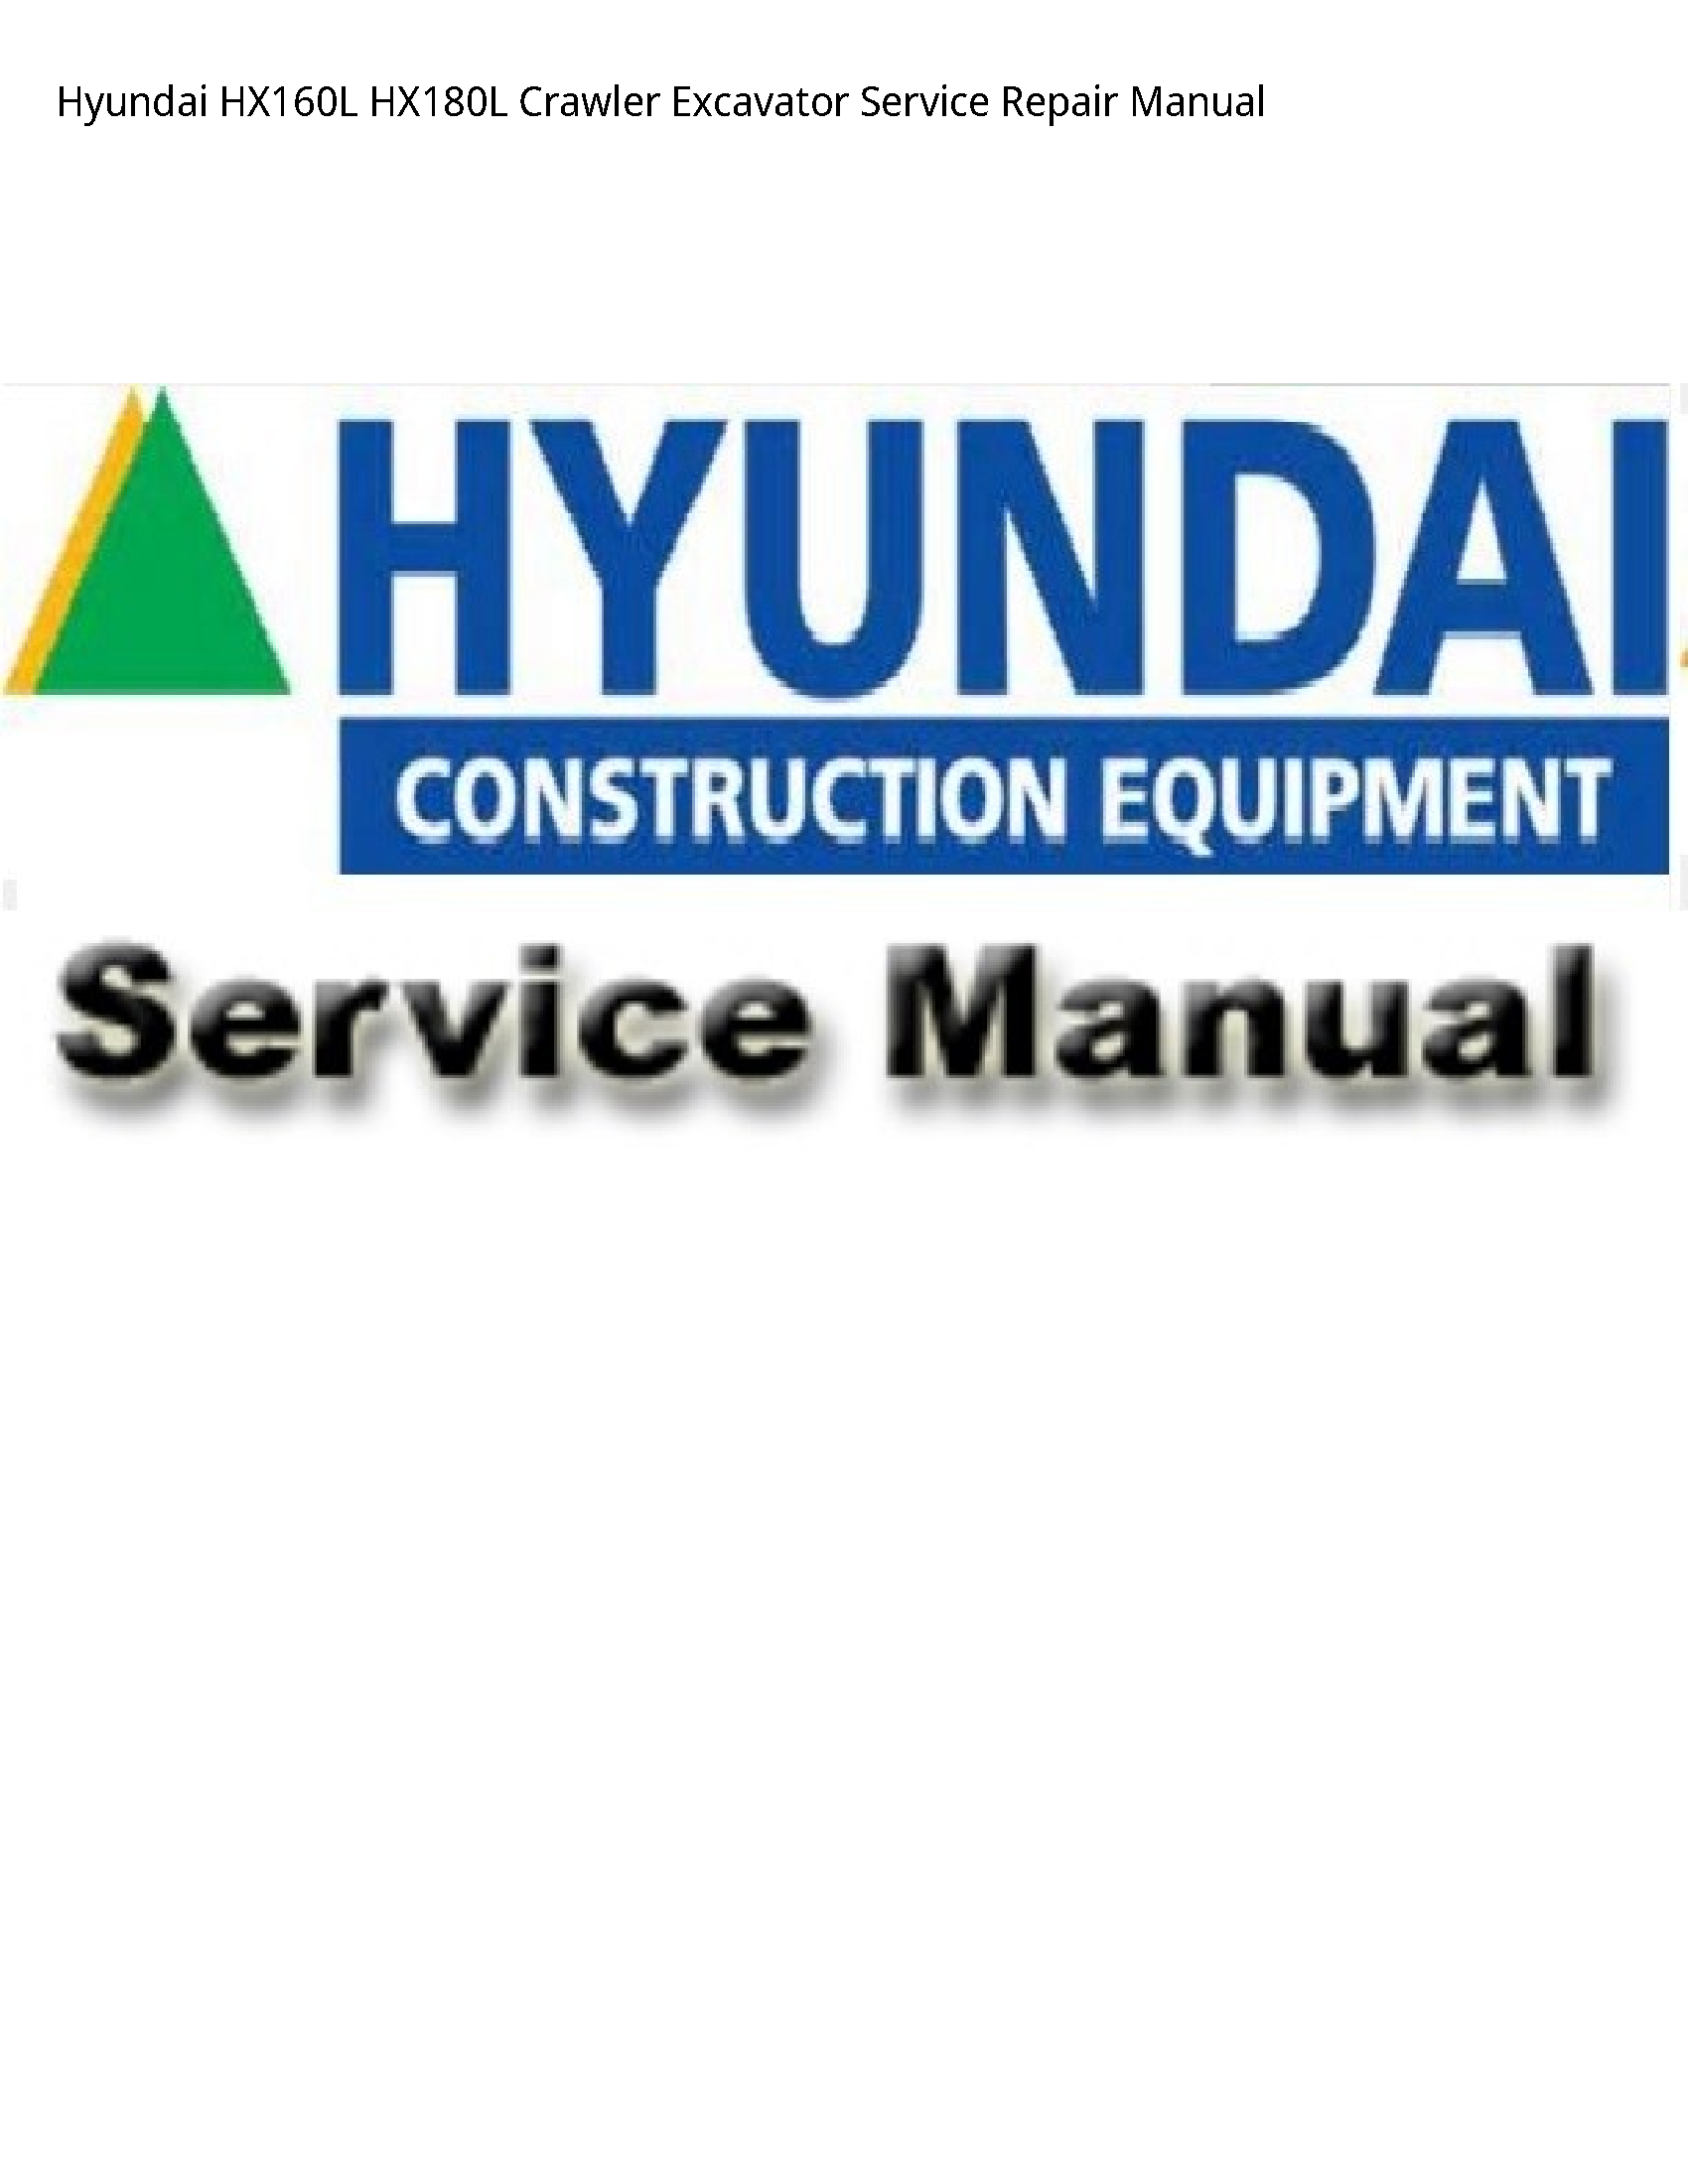 Hyundai HX160L Crawler Excavator manual